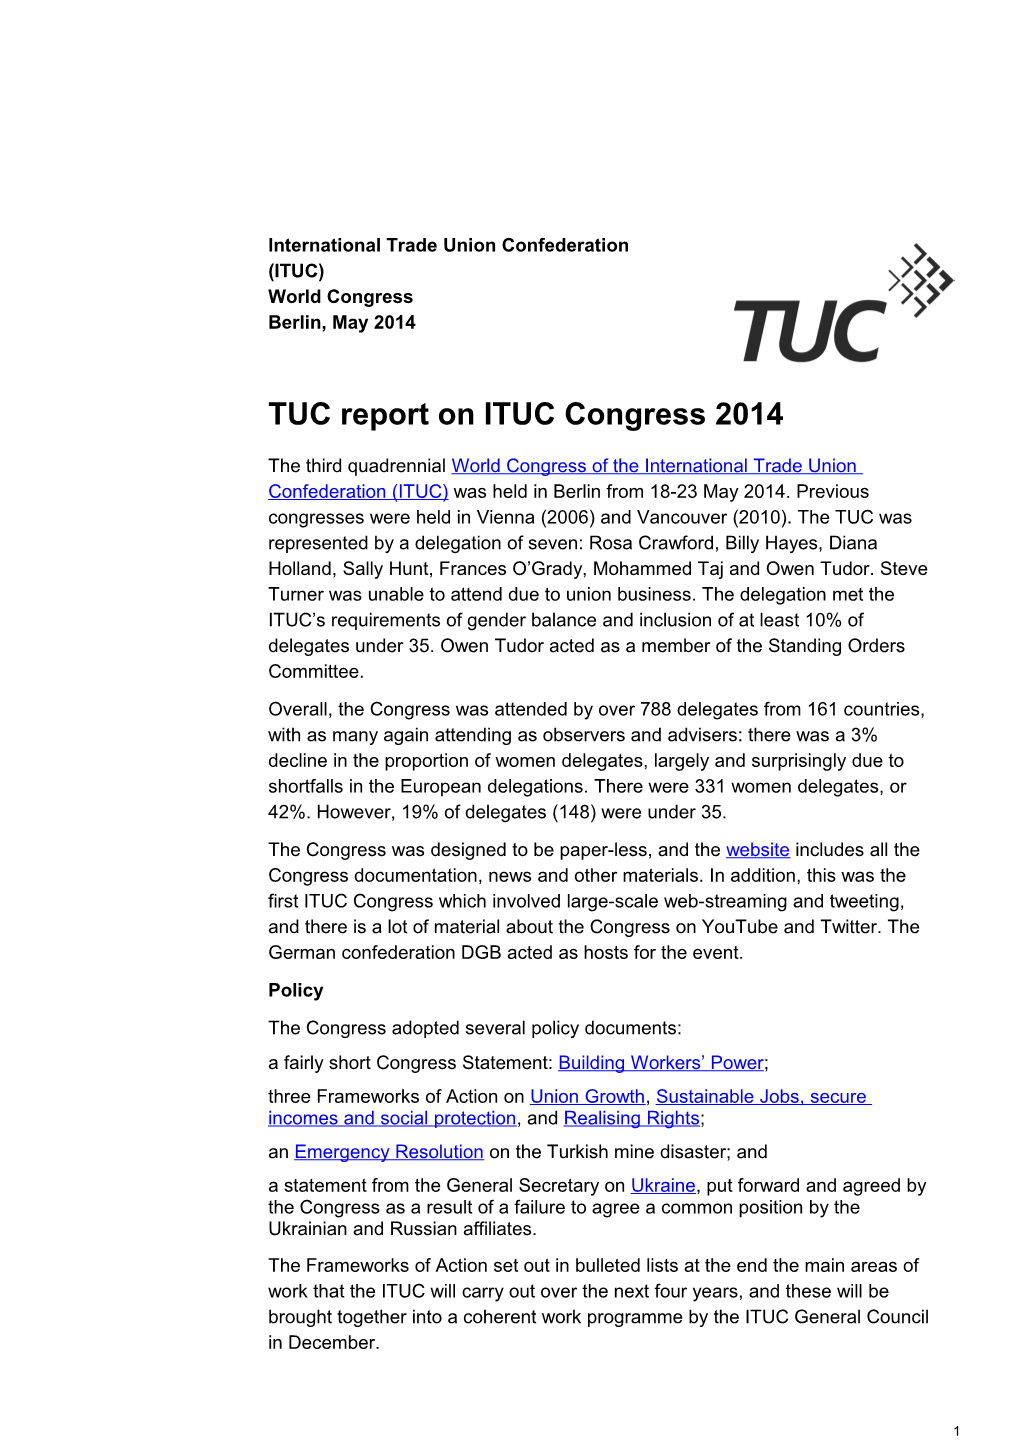 ITUC Congress 2014